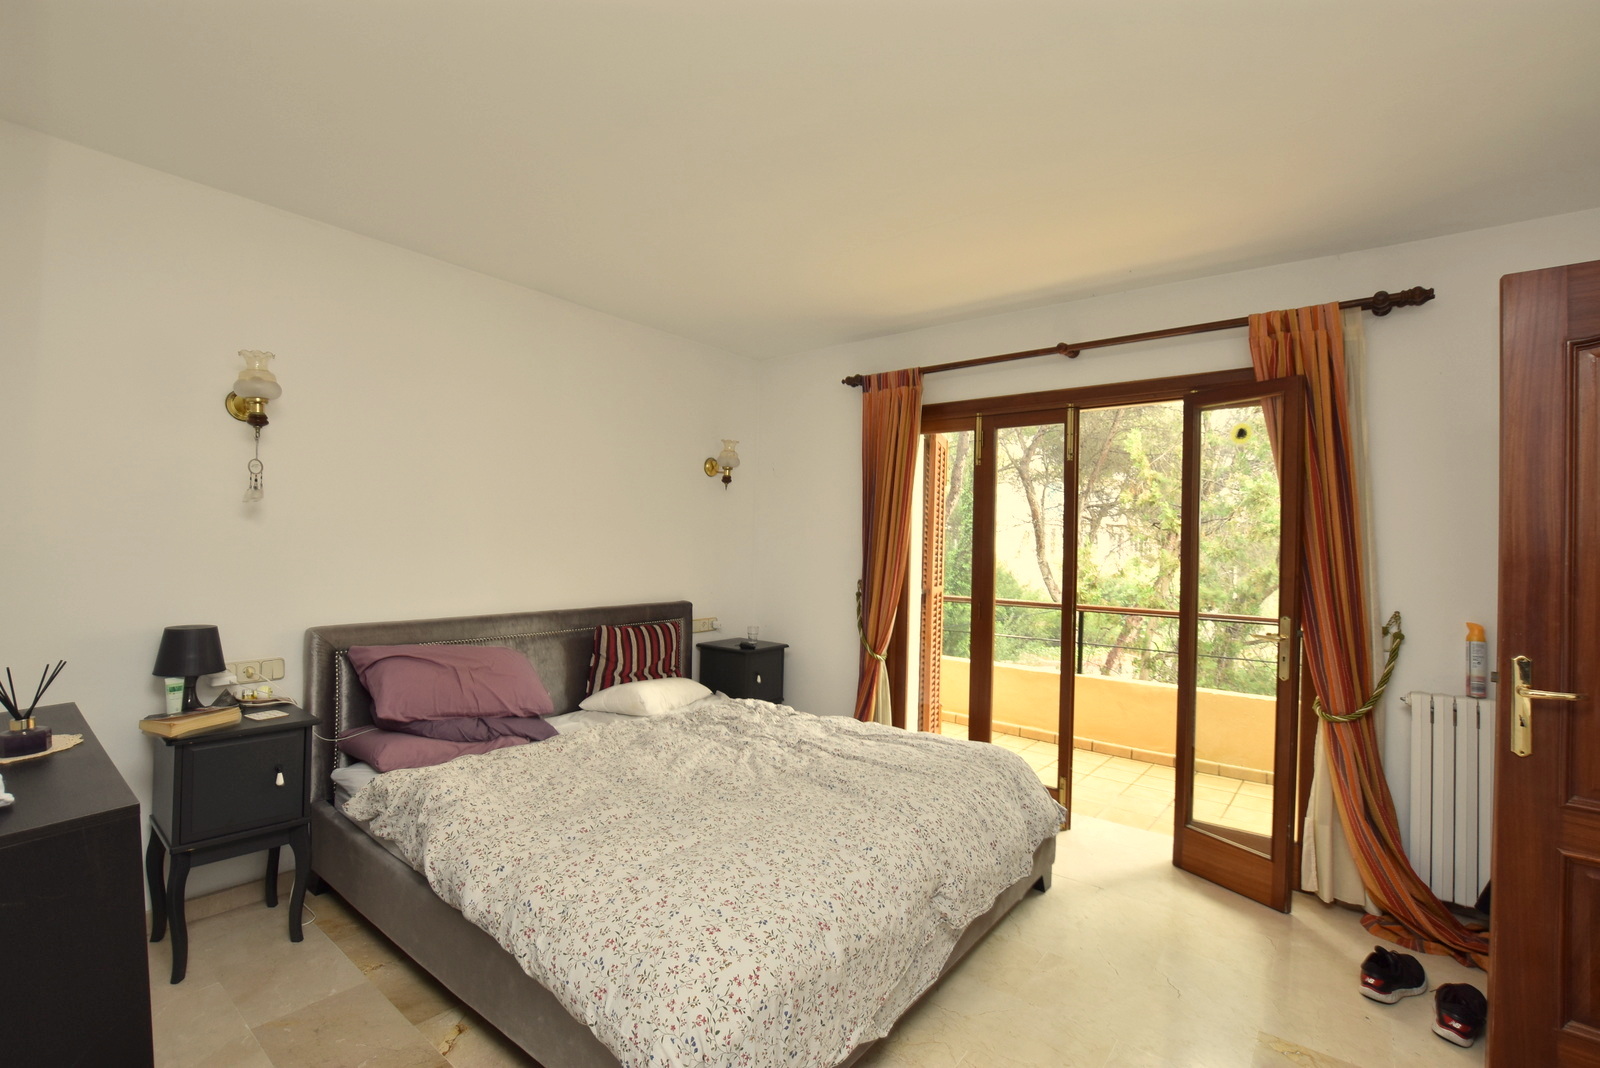 4 Slaapkamer Villa in mediterrane stijl in Costa dén Blanes